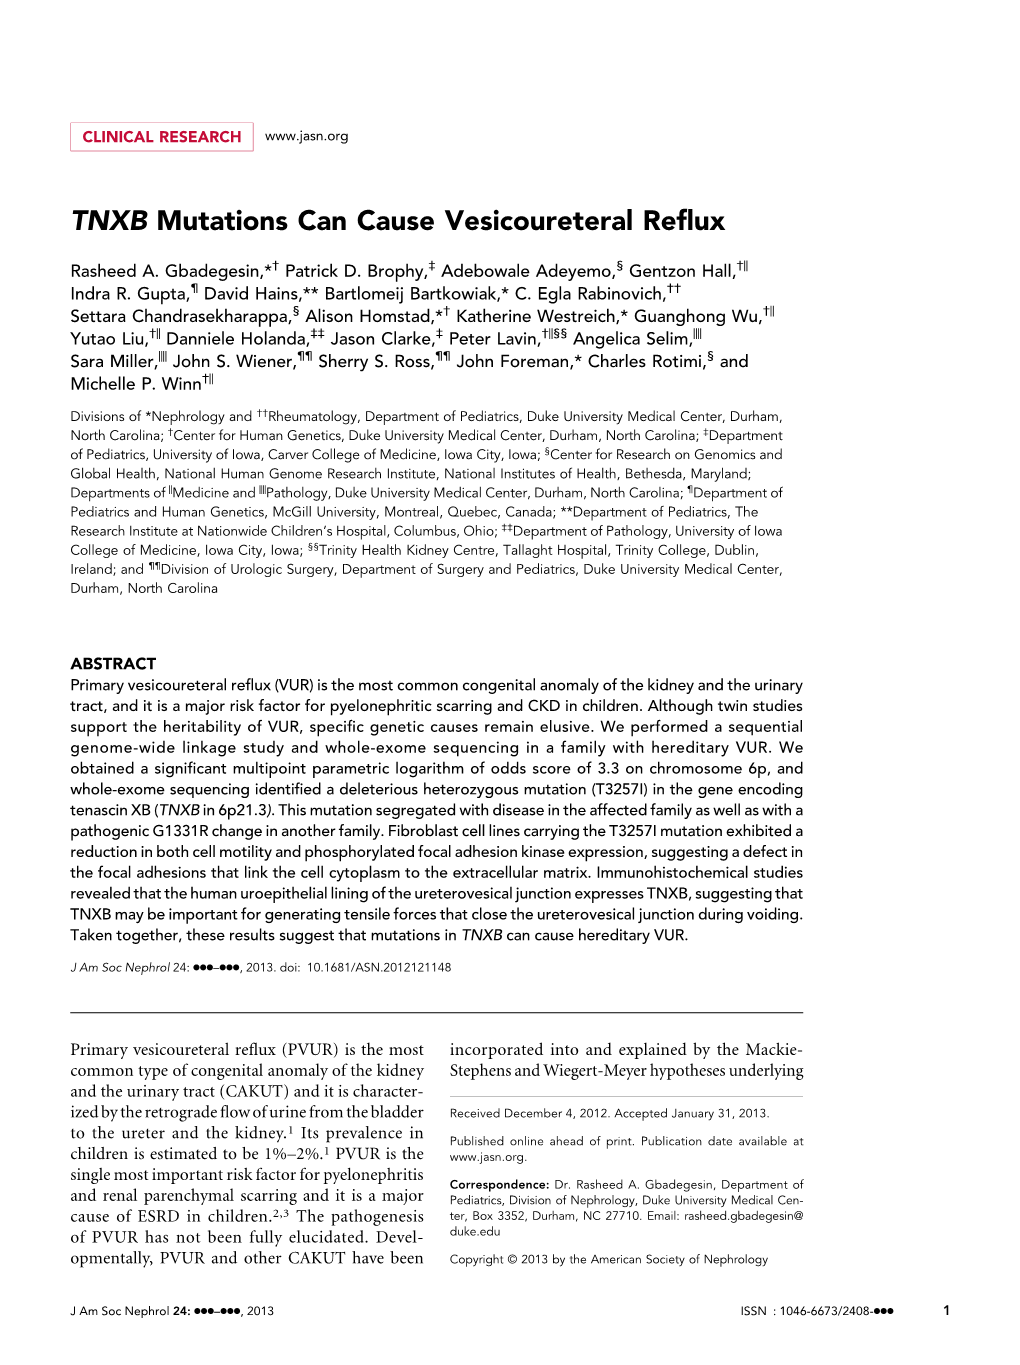 TNXB Mutations Can Cause Vesicoureteral Reflux